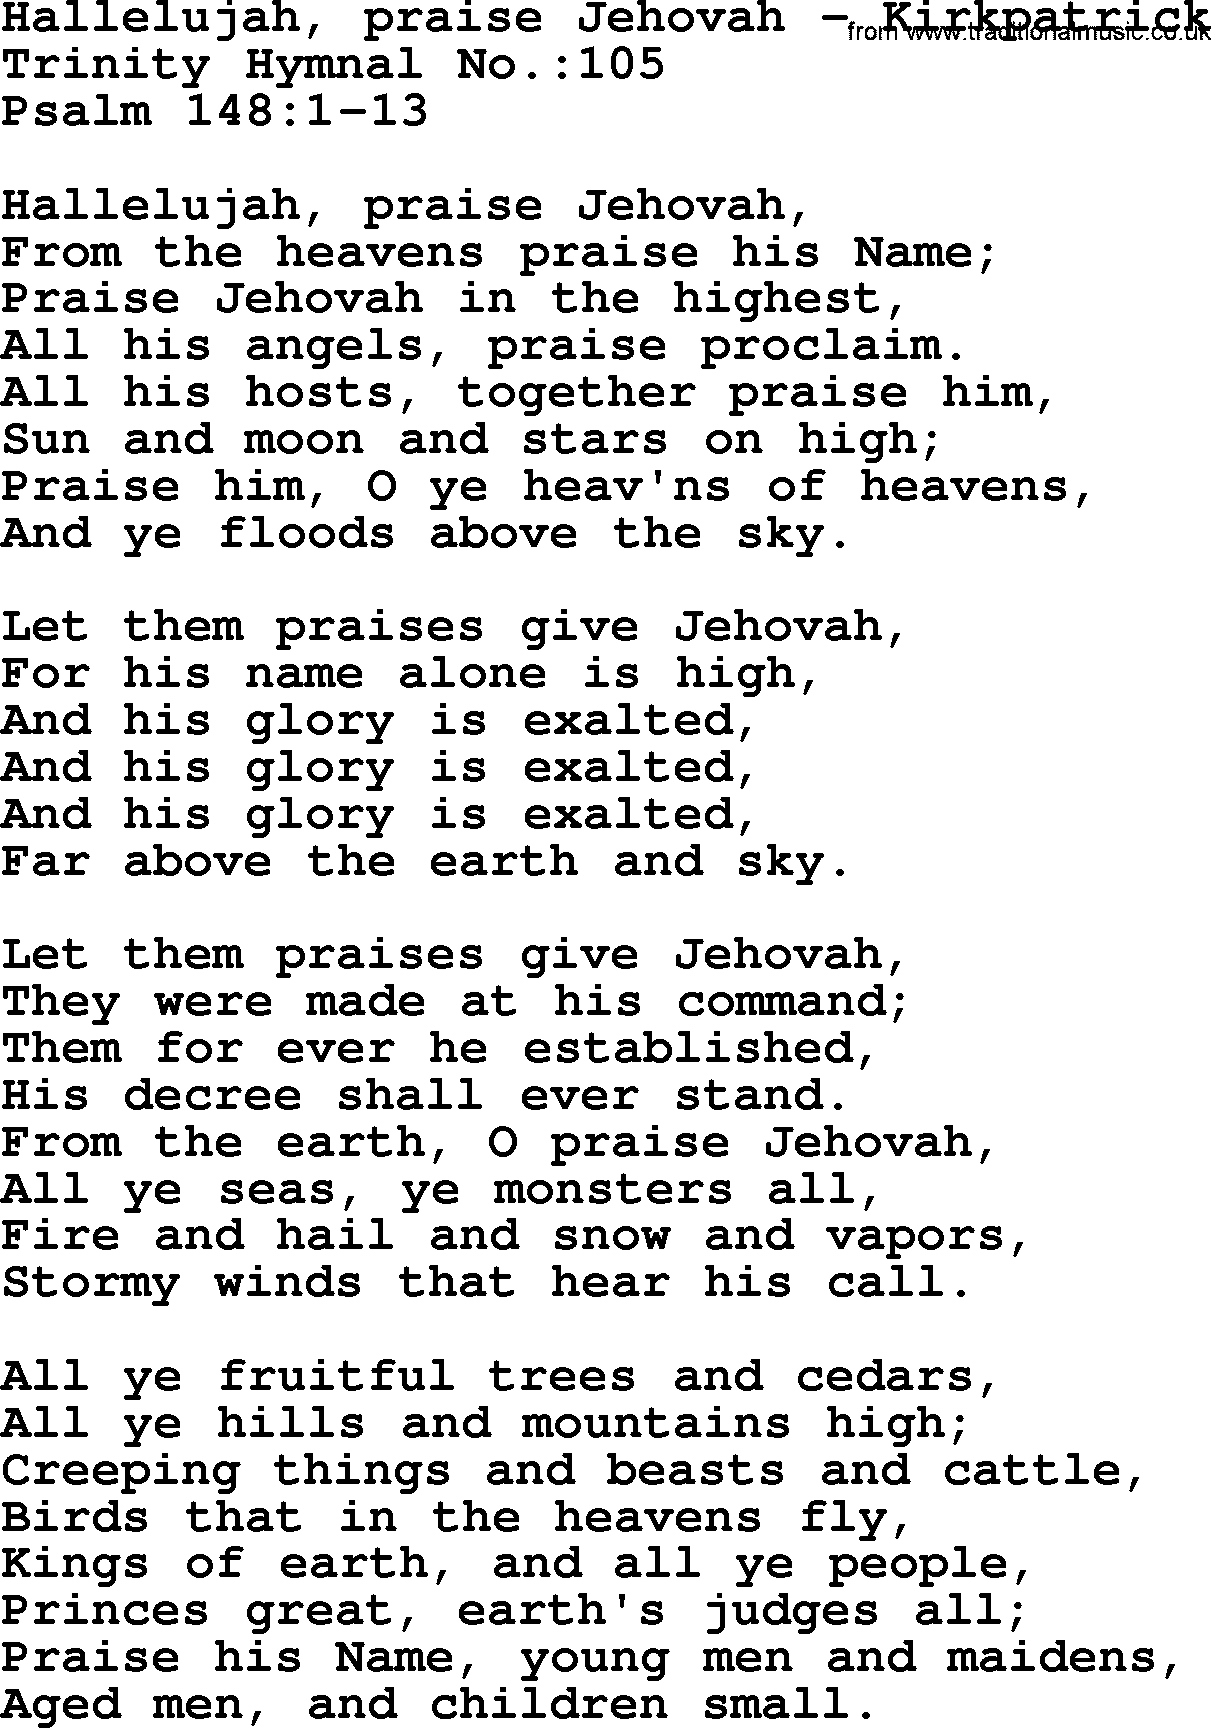 Trinity Hymnal Hymn: Hallelujah, Praise Jehovah--Kirkpatrick, lyrics with midi music